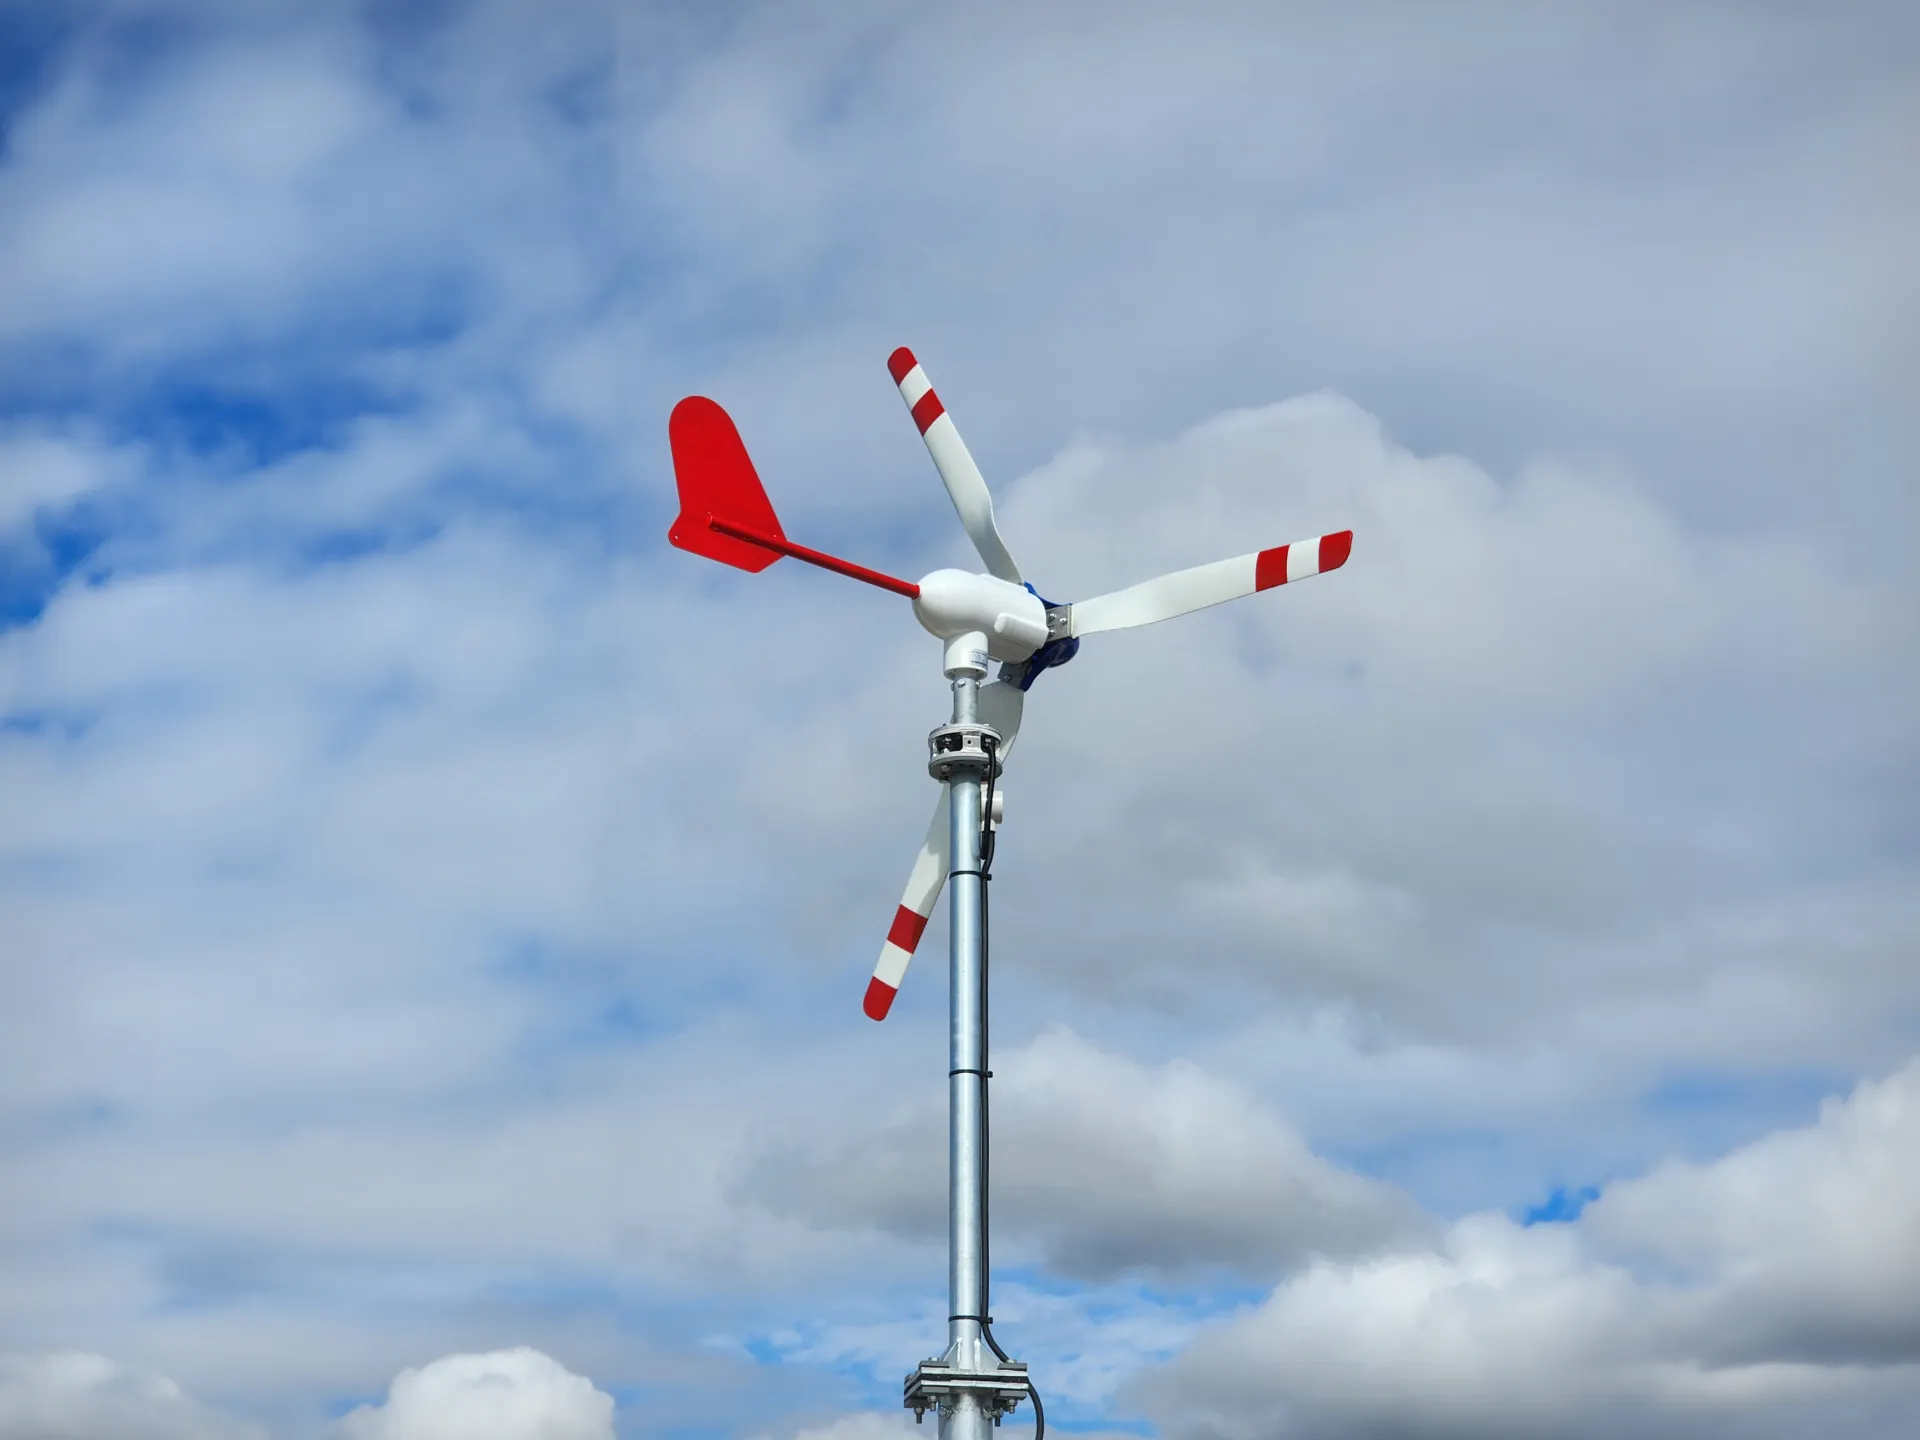 A photo of a wind turbine, facing backwards.